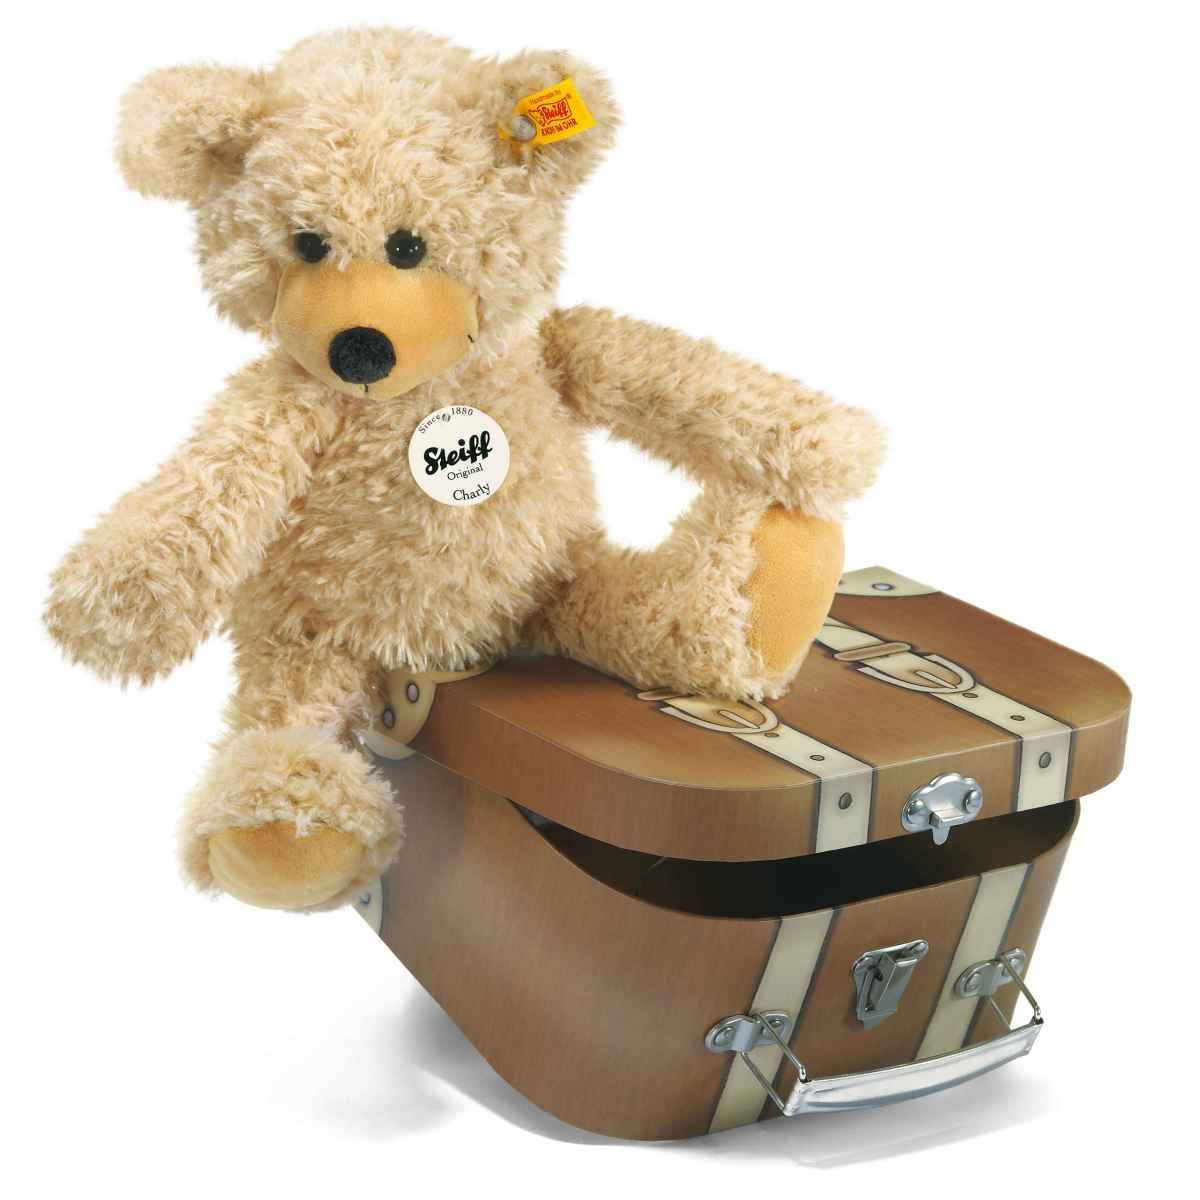 Steiff 30cm Beige Charly Dangling Teddy Bear in Brown Suitcase